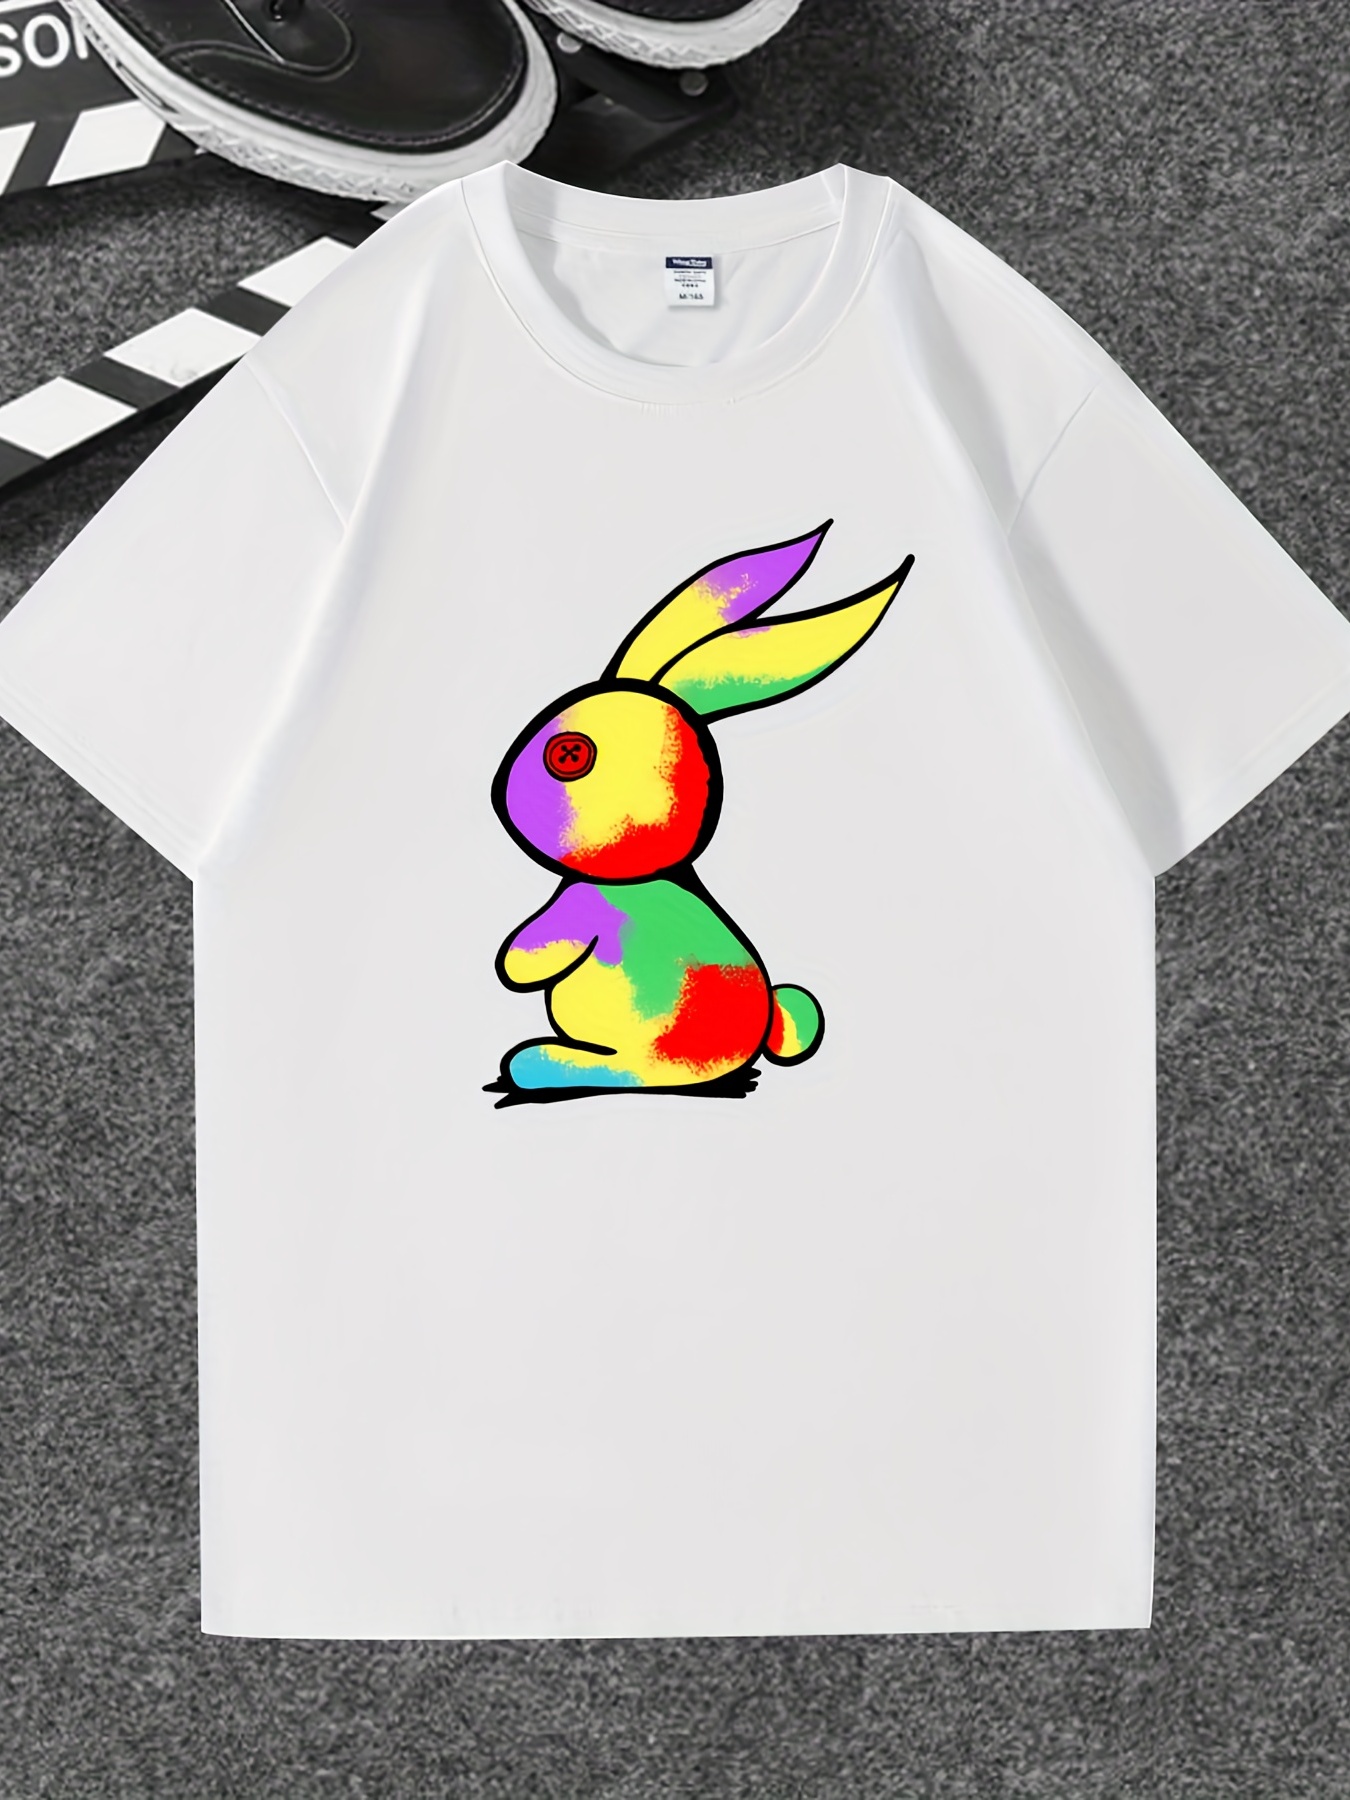 Bad Bunny Shirt / Bad Bunny Gifts / Summer Outfits / Bad Bunny